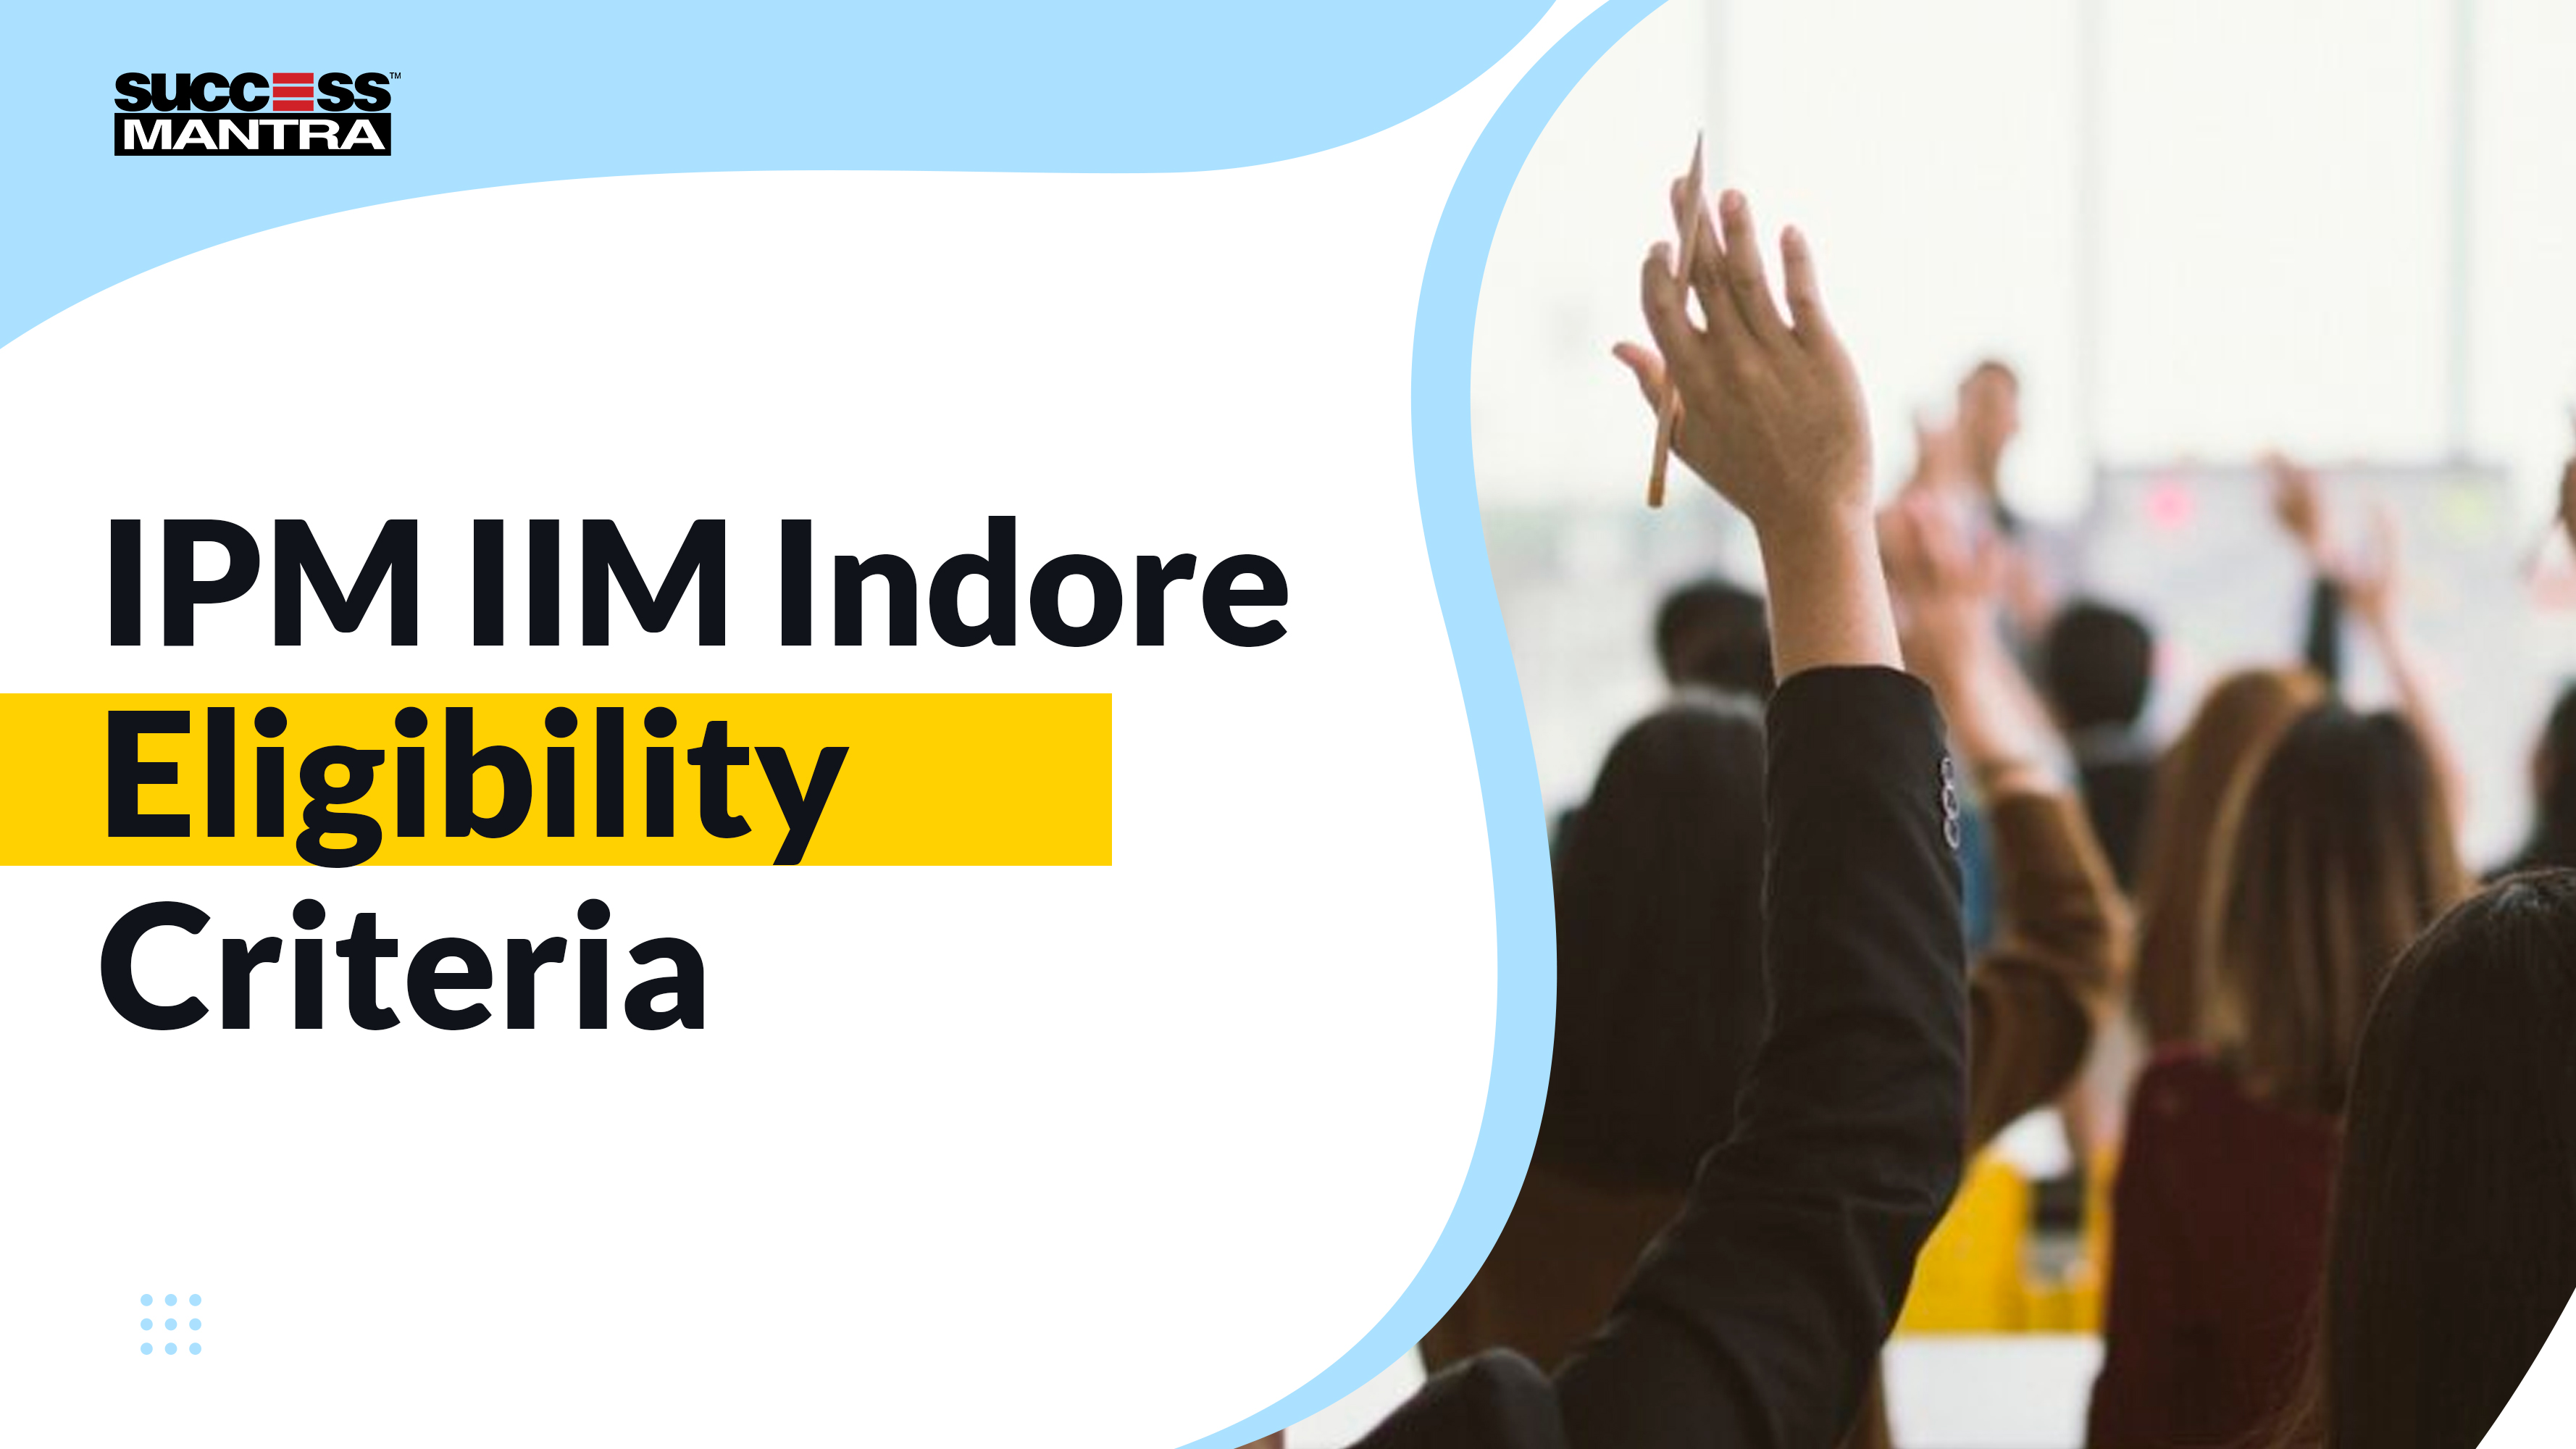 IPM IIM Indore Eligibility Criteria, Success Mantra Coaching Institute, Best Coaching Institute For BBA Located In GTB Nagar Delhi 